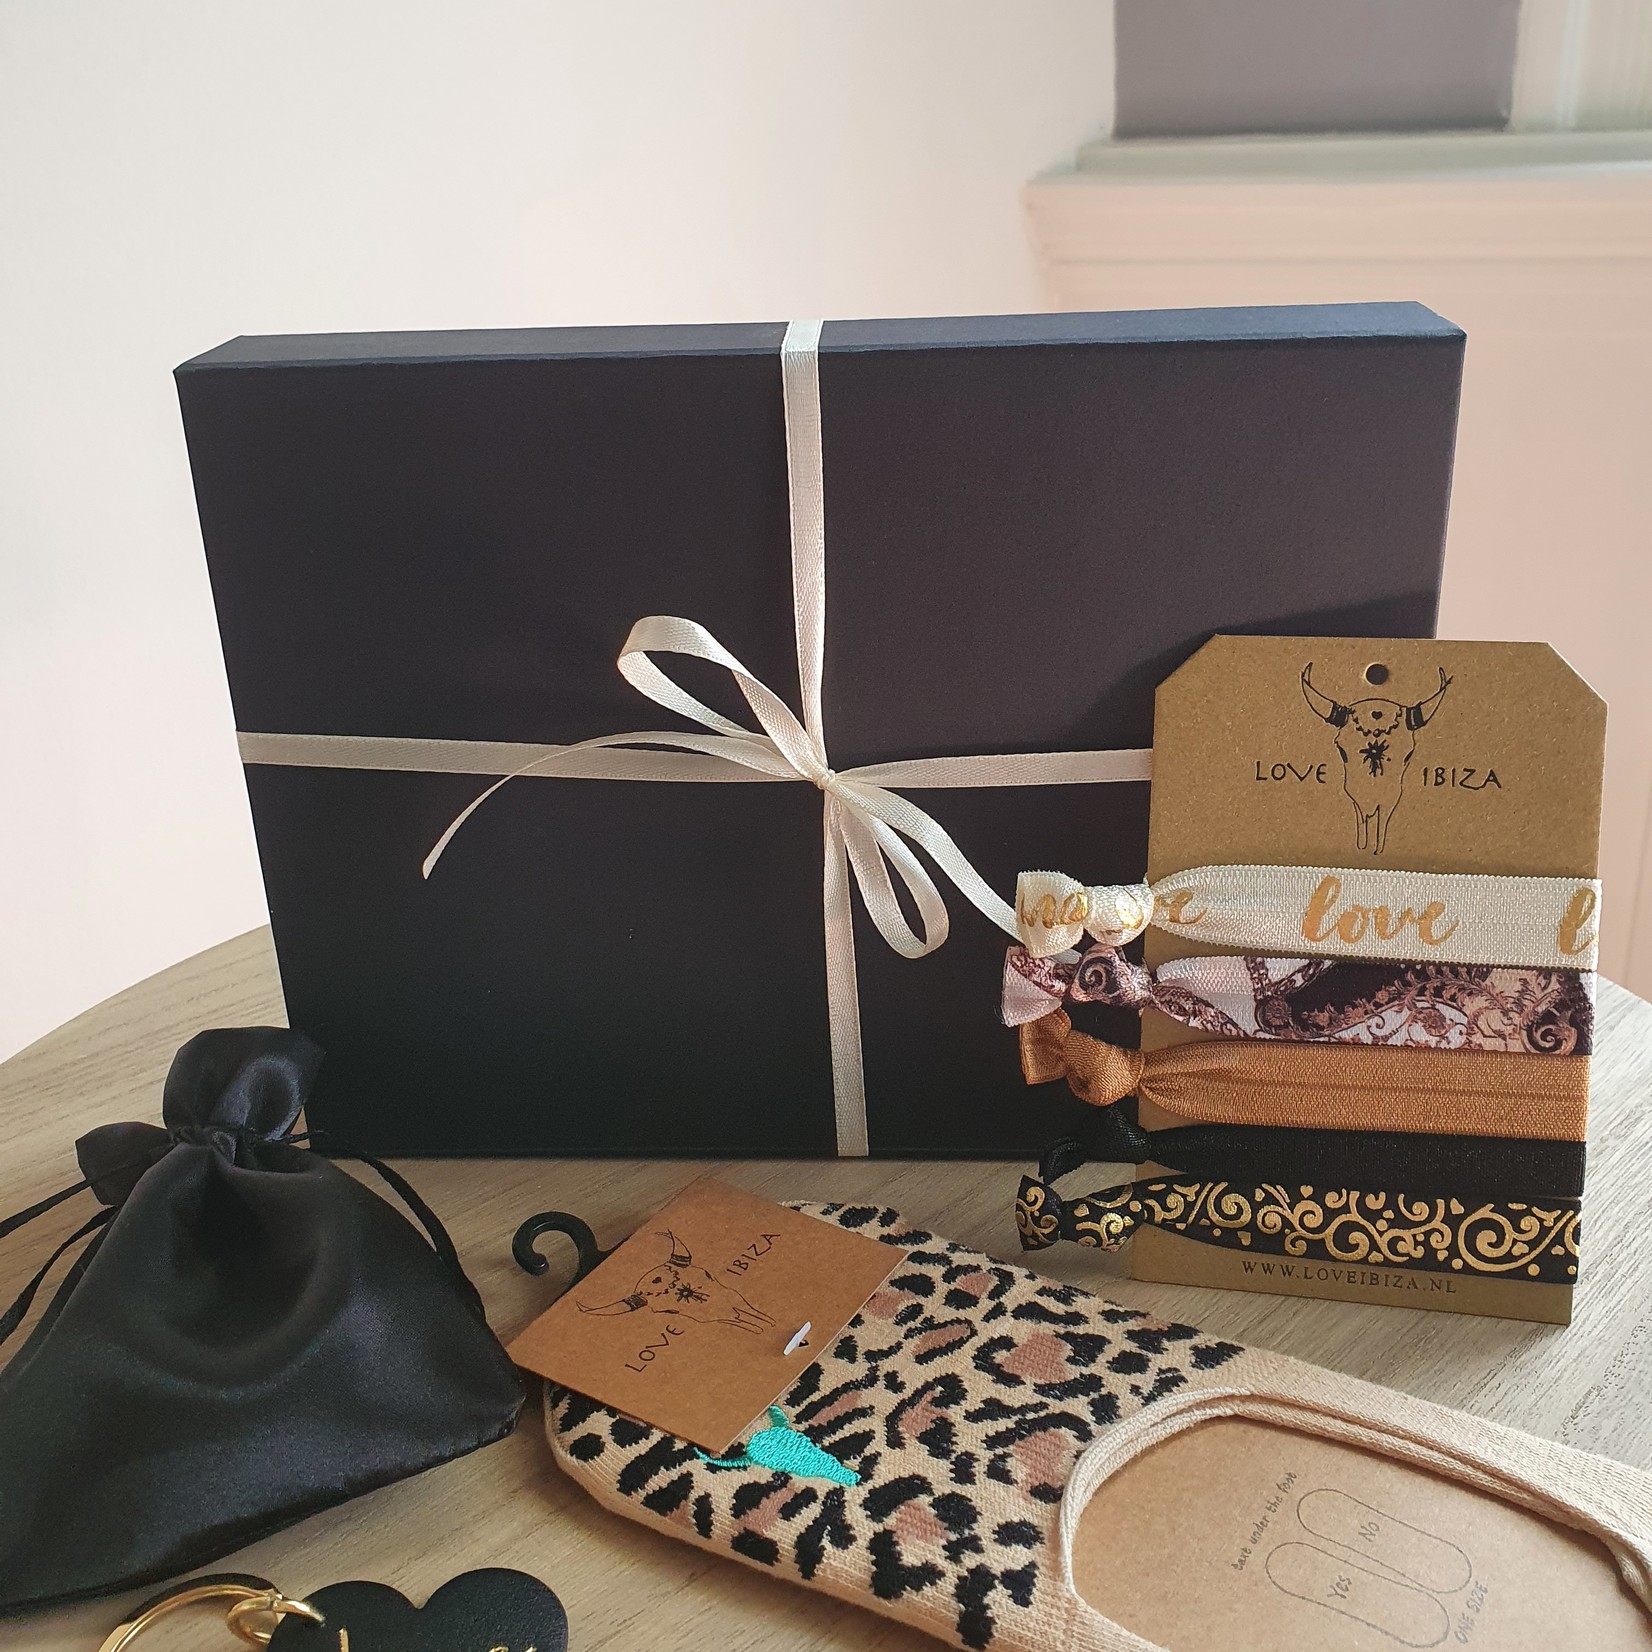 Eve's Gifts Pantersokjes Gift Box